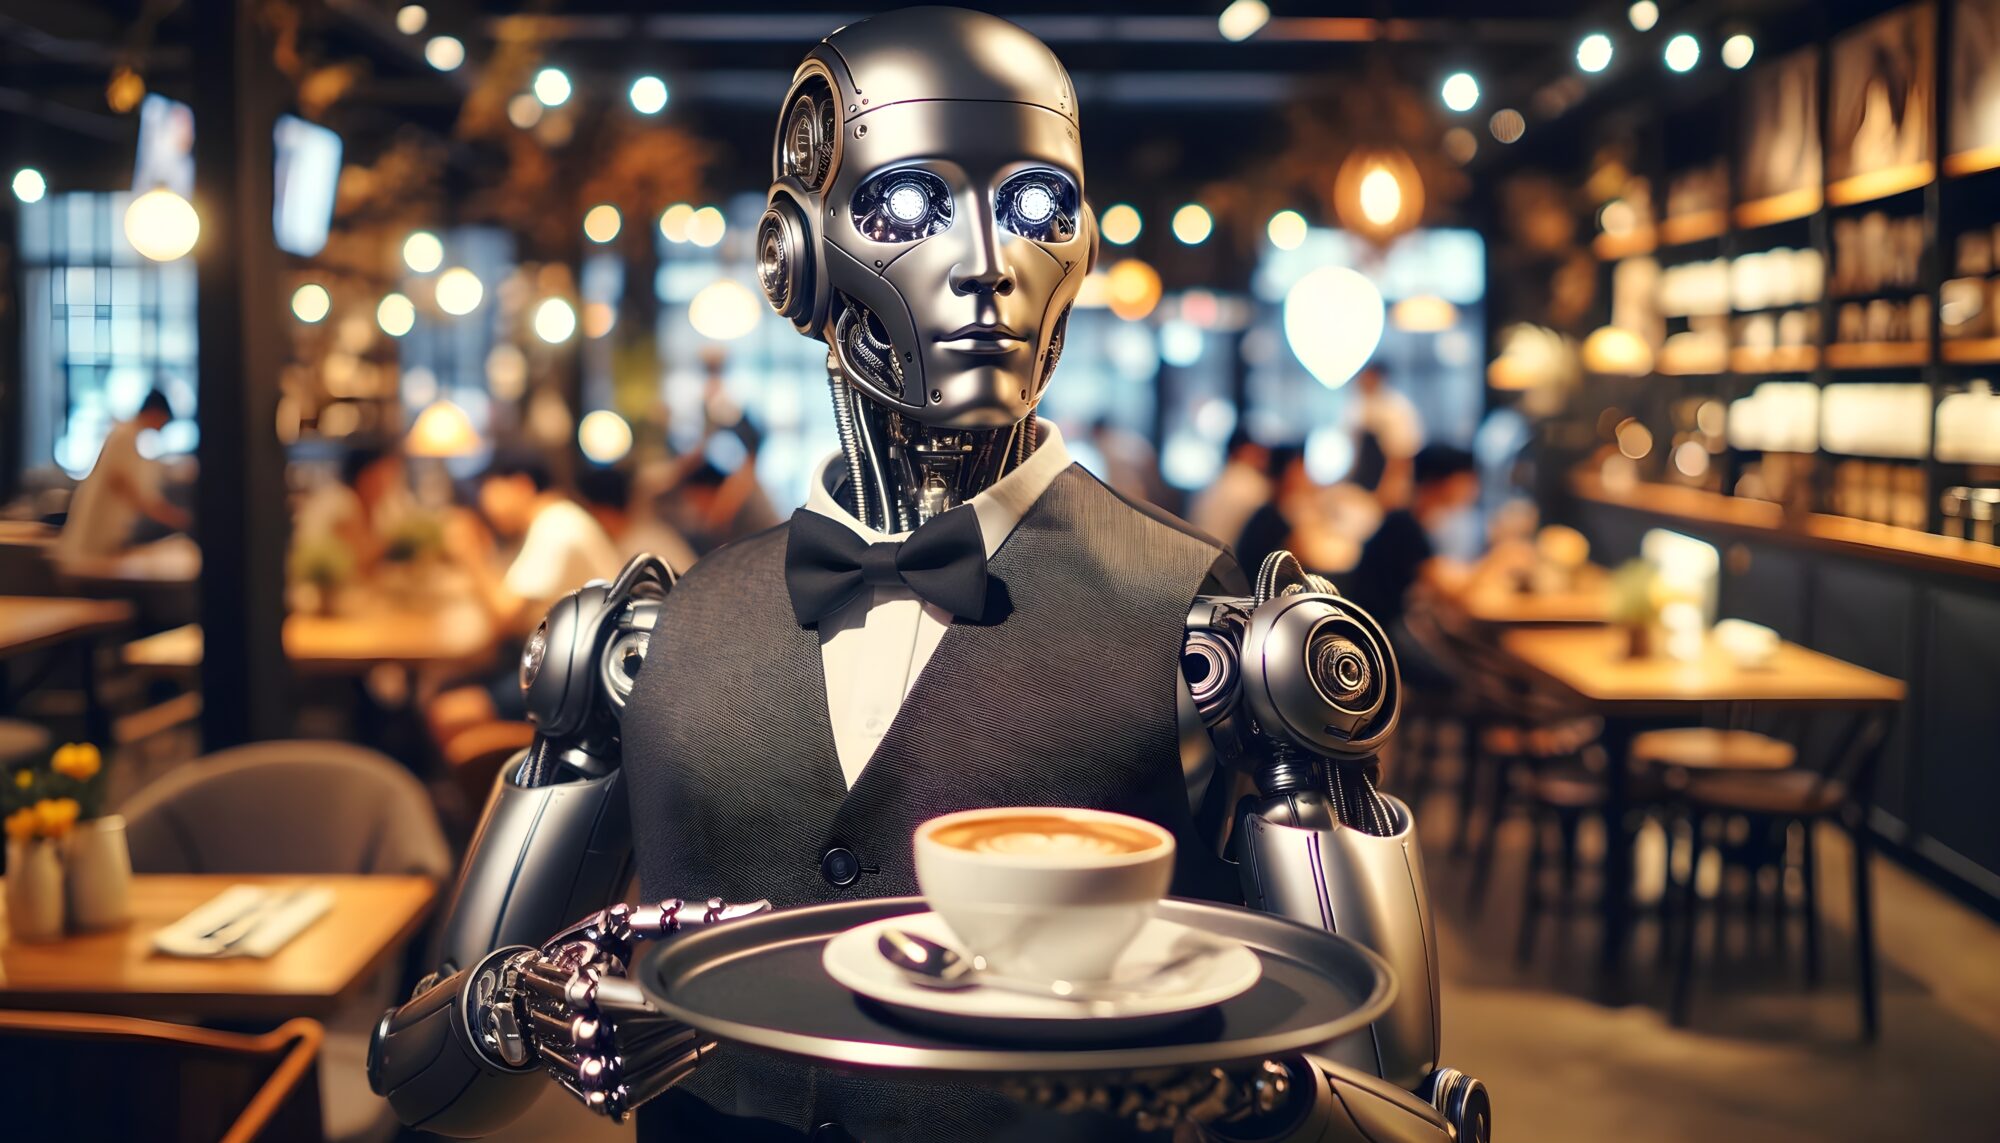 A robot waiter serving coffee at a café. to communicate restaurant technology trends.